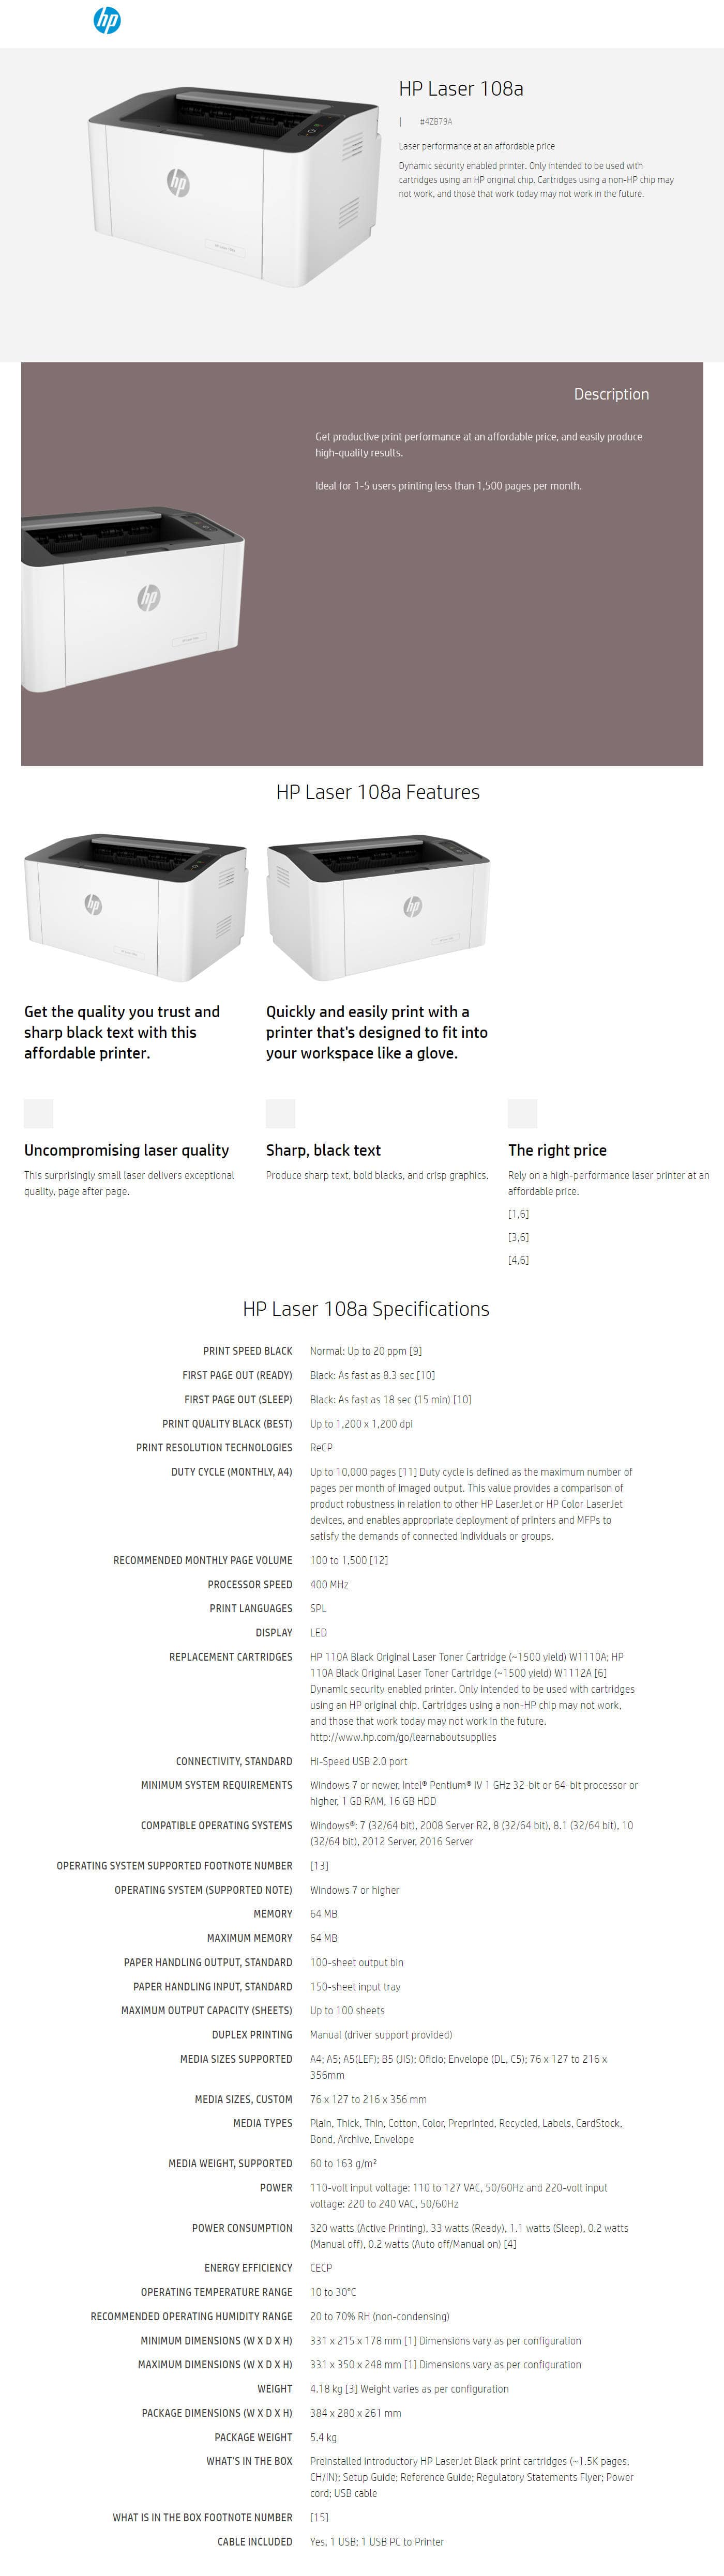 Buy Online HP Laser 108a Printer (4ZB79A)